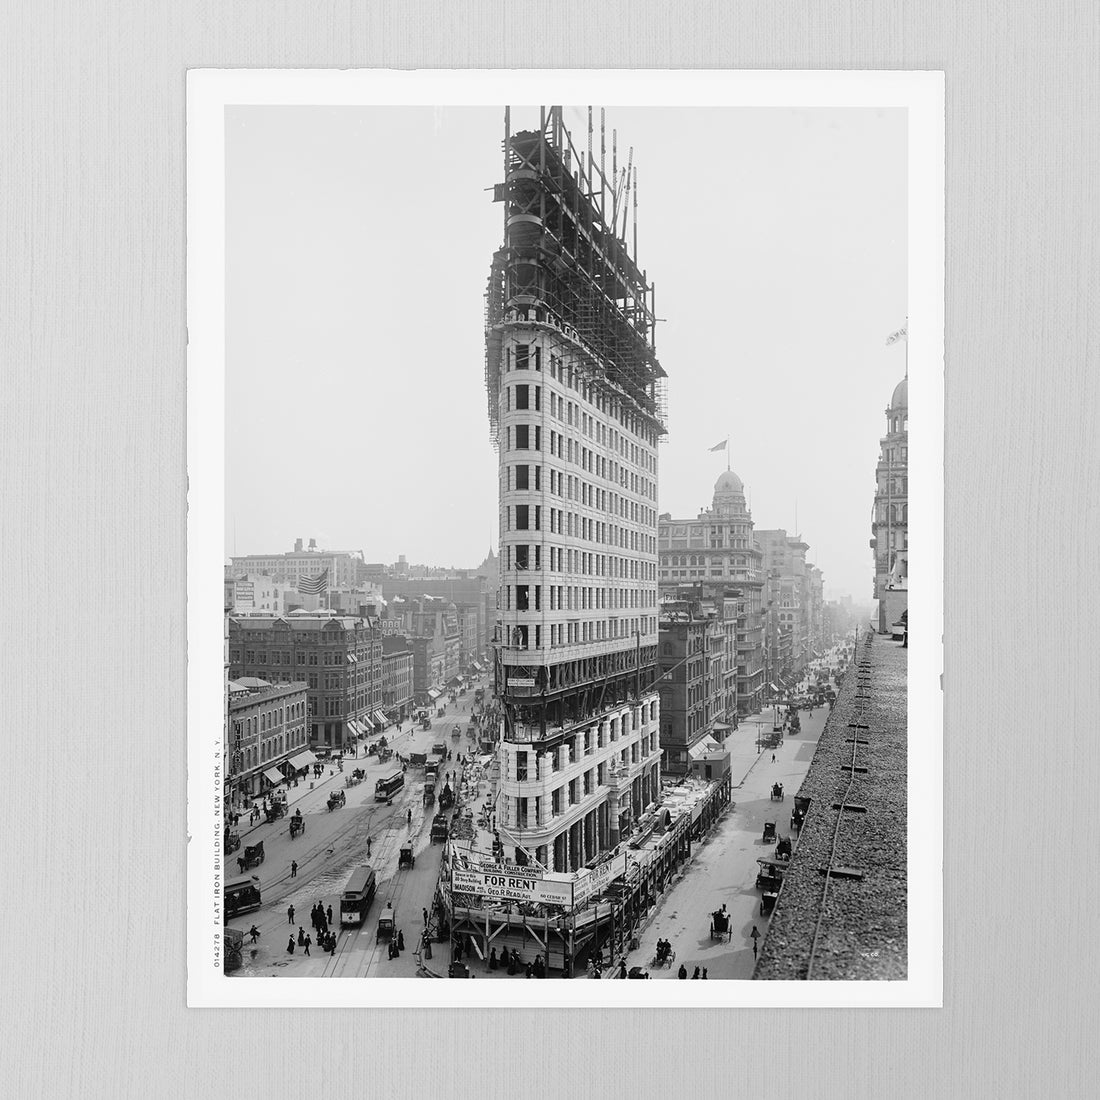 Flatiron Building Under Construction by Jordan J. Lloyd, 1939